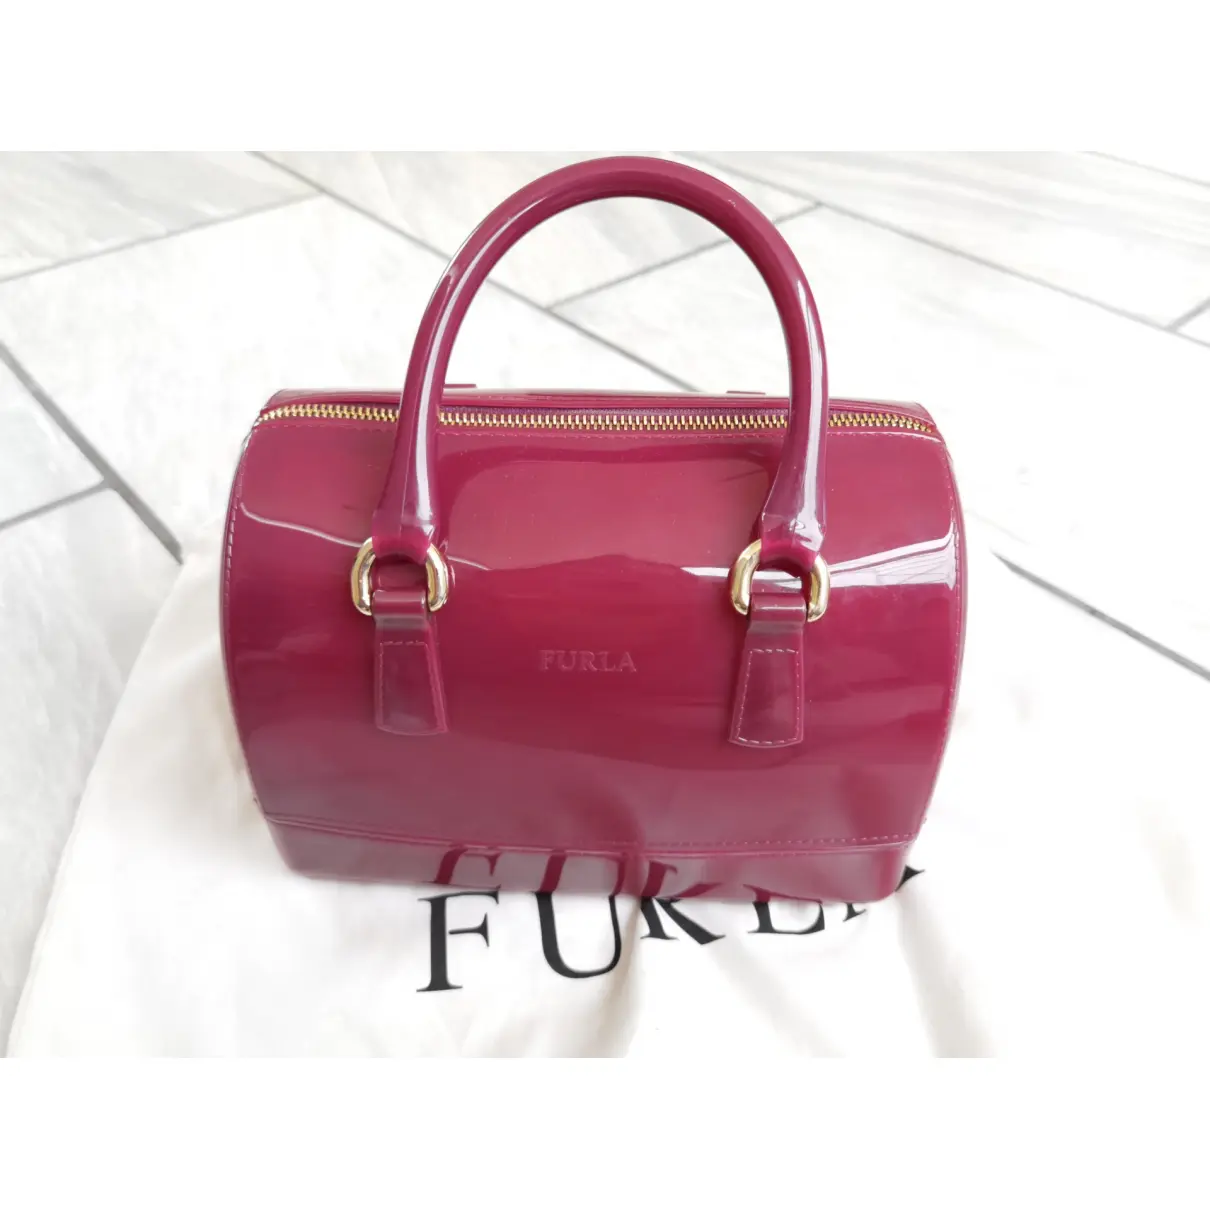 Buy Furla Candy Bag handbag online